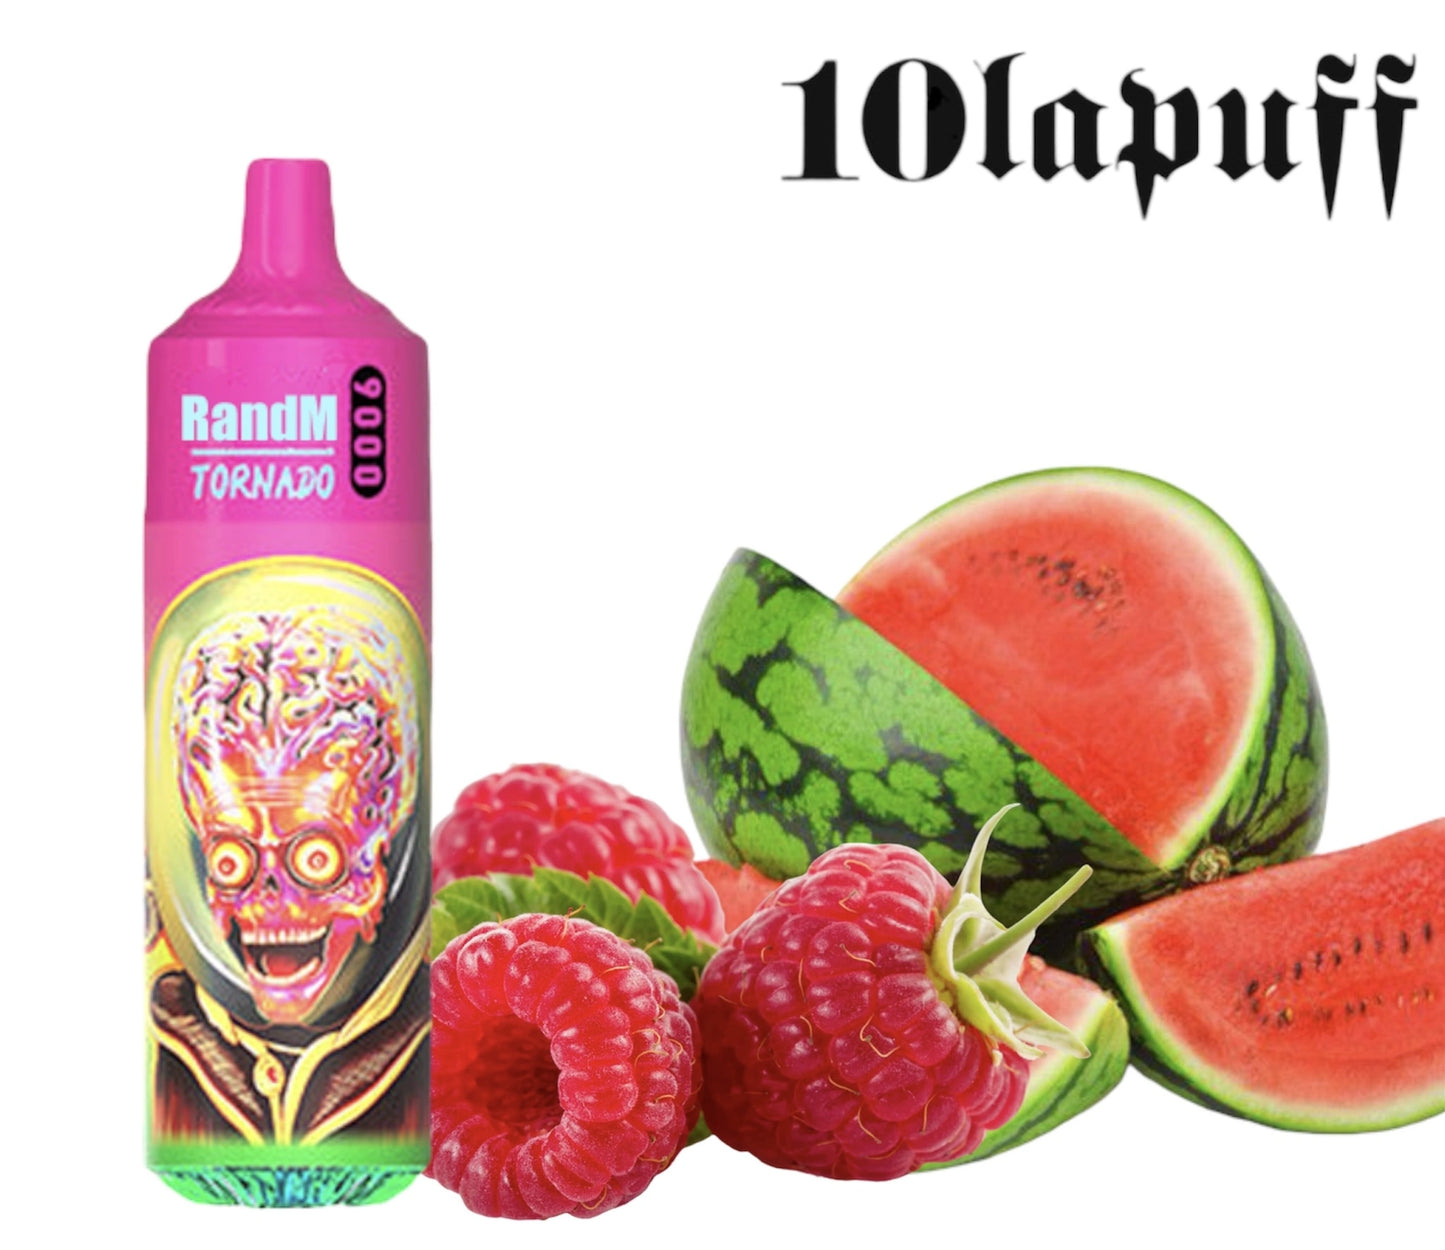 PUFF 9000 TORNADO RandM – Himbeer-Wassermelone